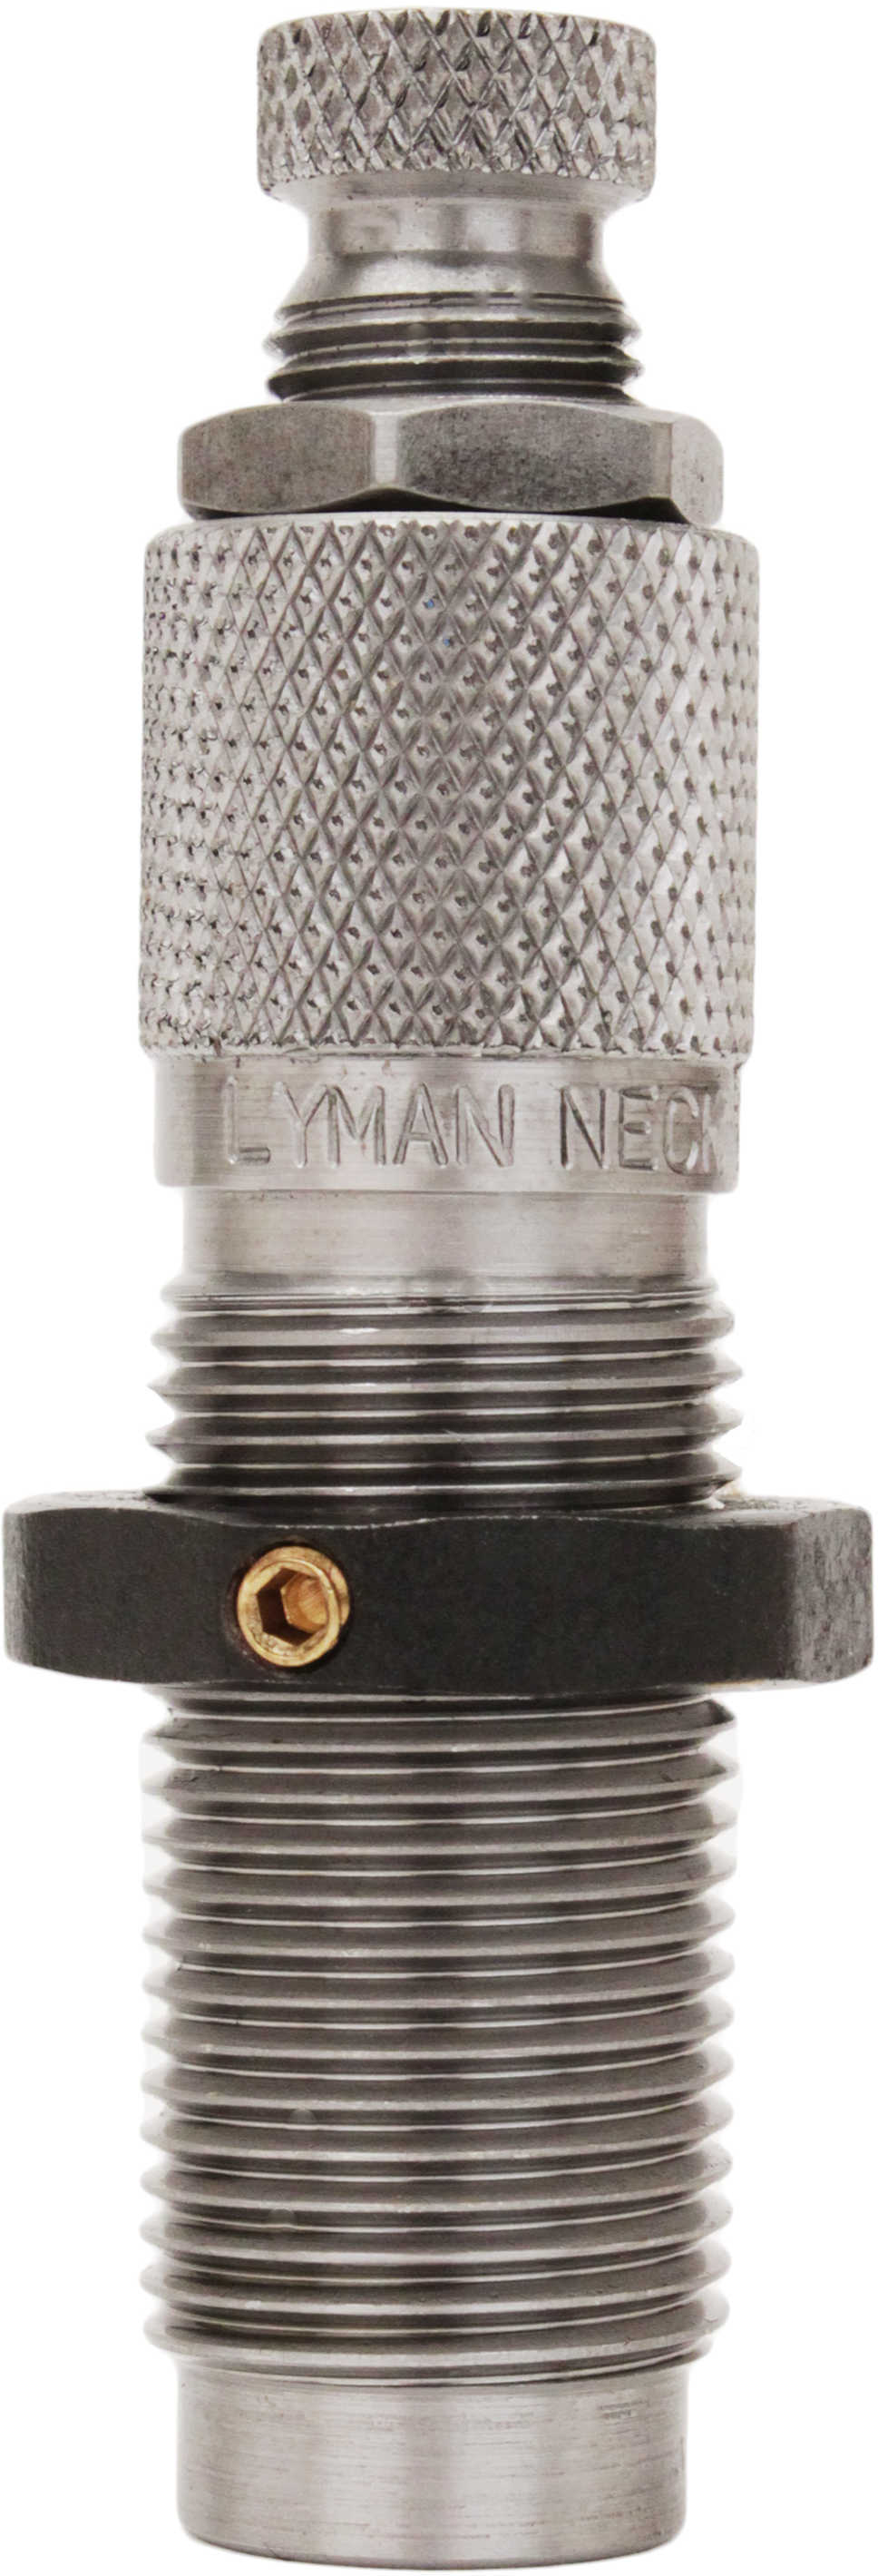 Lyman 40 Smith&Wesson/10mm Neck Expander M Die